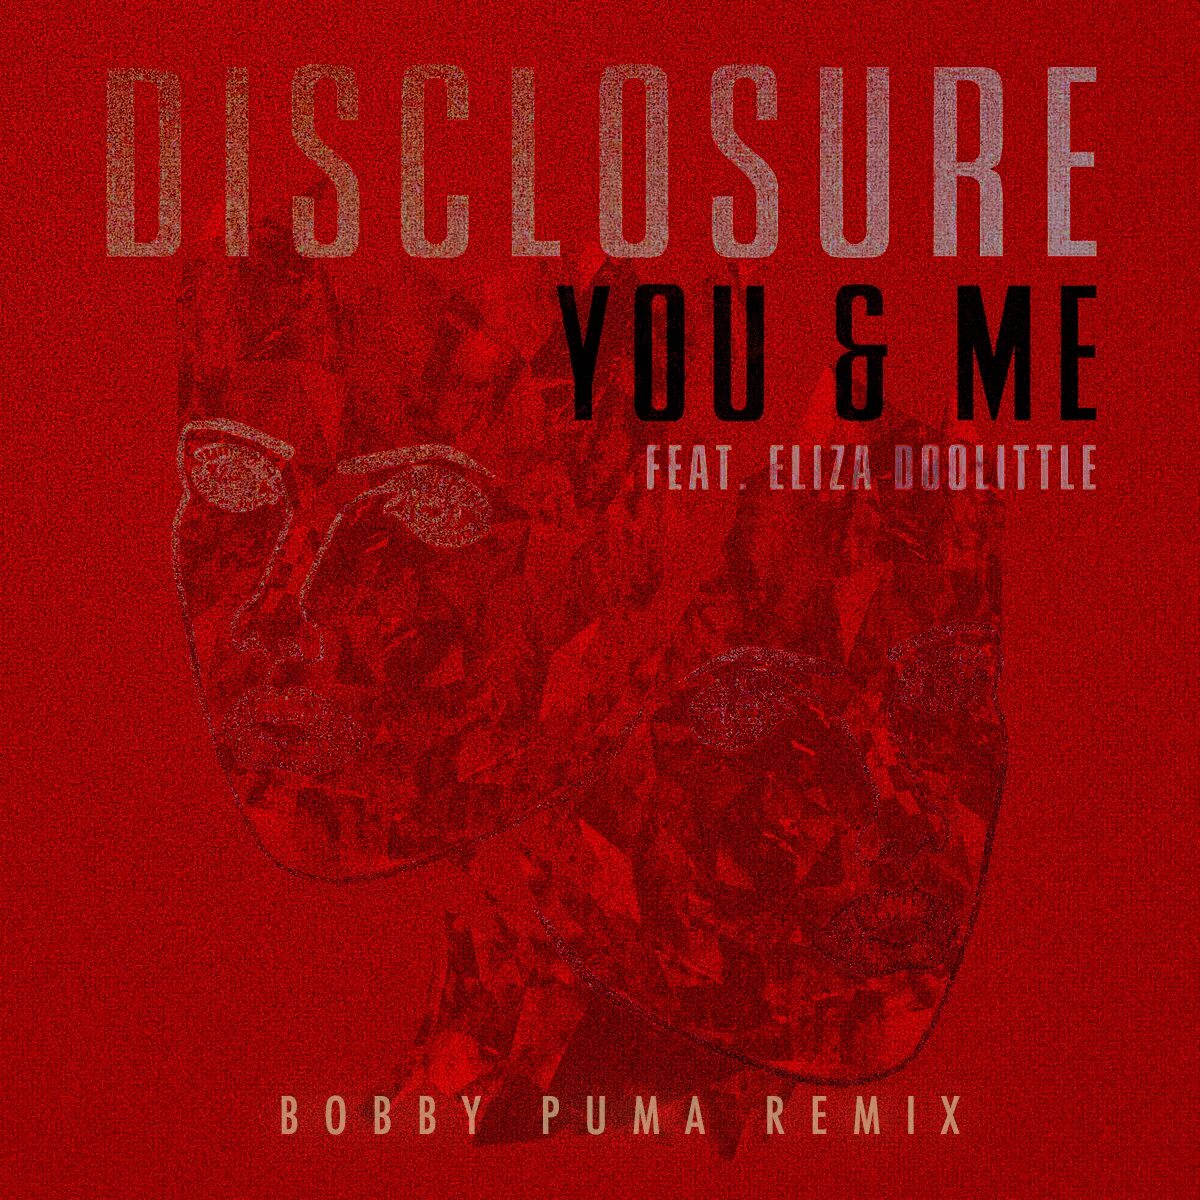 You & me - Disclosure (Flume. Disclosure feat. Eliza Doolittle - you & me. Disclosure & Eliza Doolittle - you & me (Flume Remix). Disclosure you and me. You me feat eliza